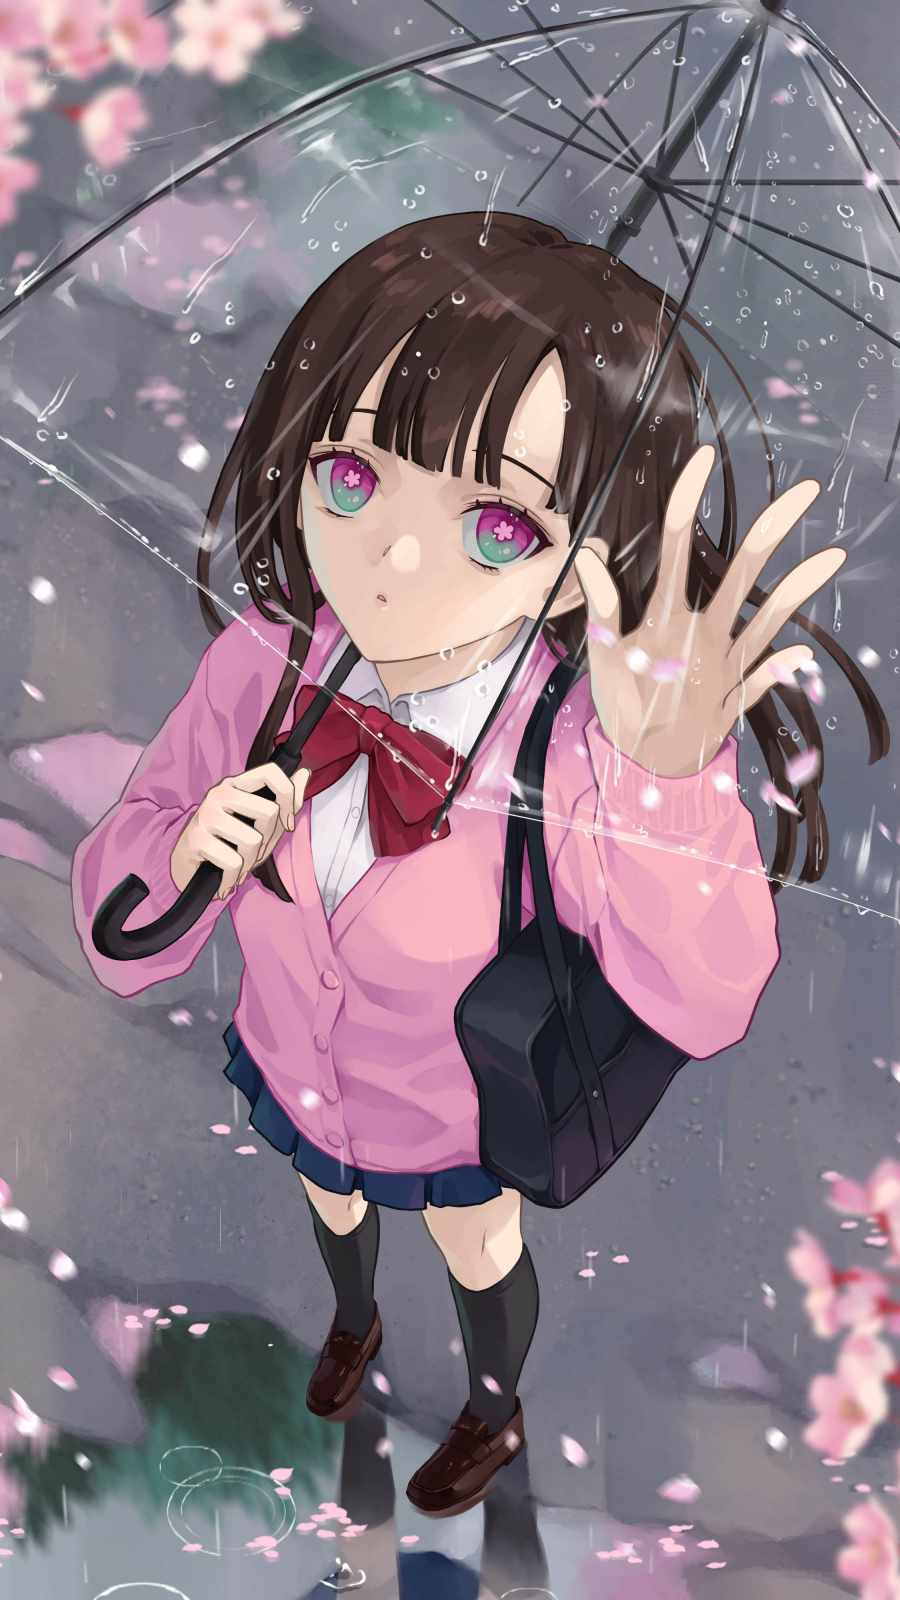 Anime Girl In Rain IPhone Wallpaper Wallpaper, iPhone Wallpaper